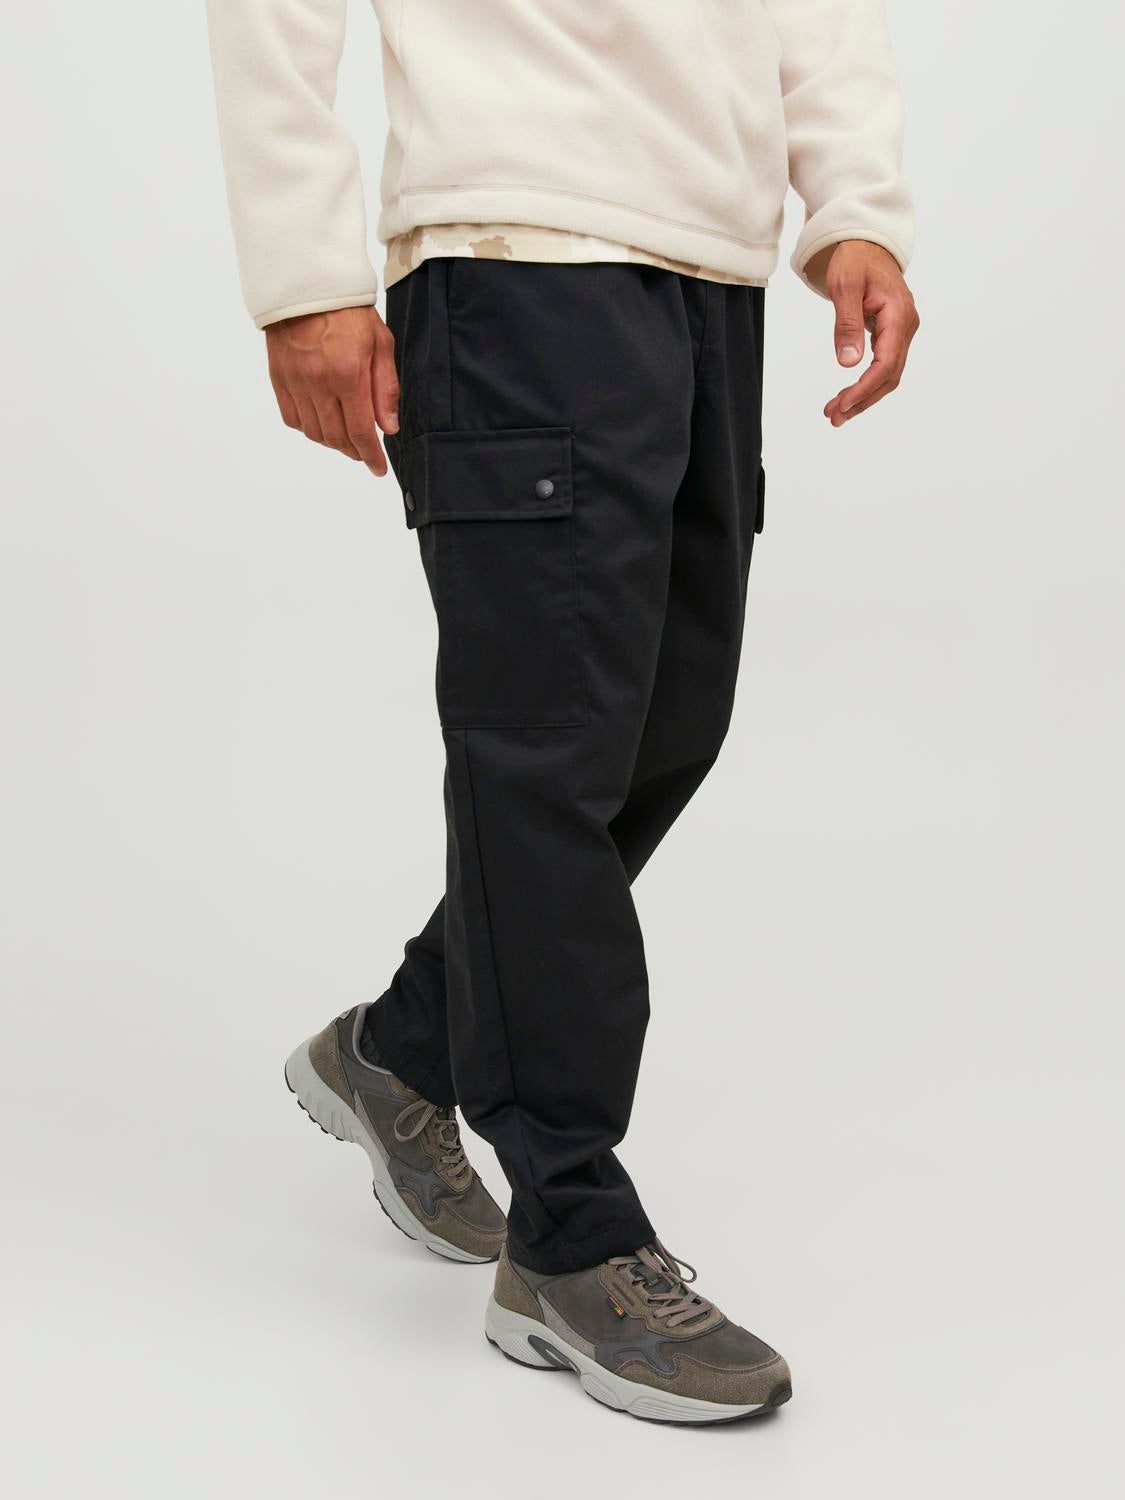 Buy Black Trousers & Pants for Men by Jack & Jones Online | Ajio.com